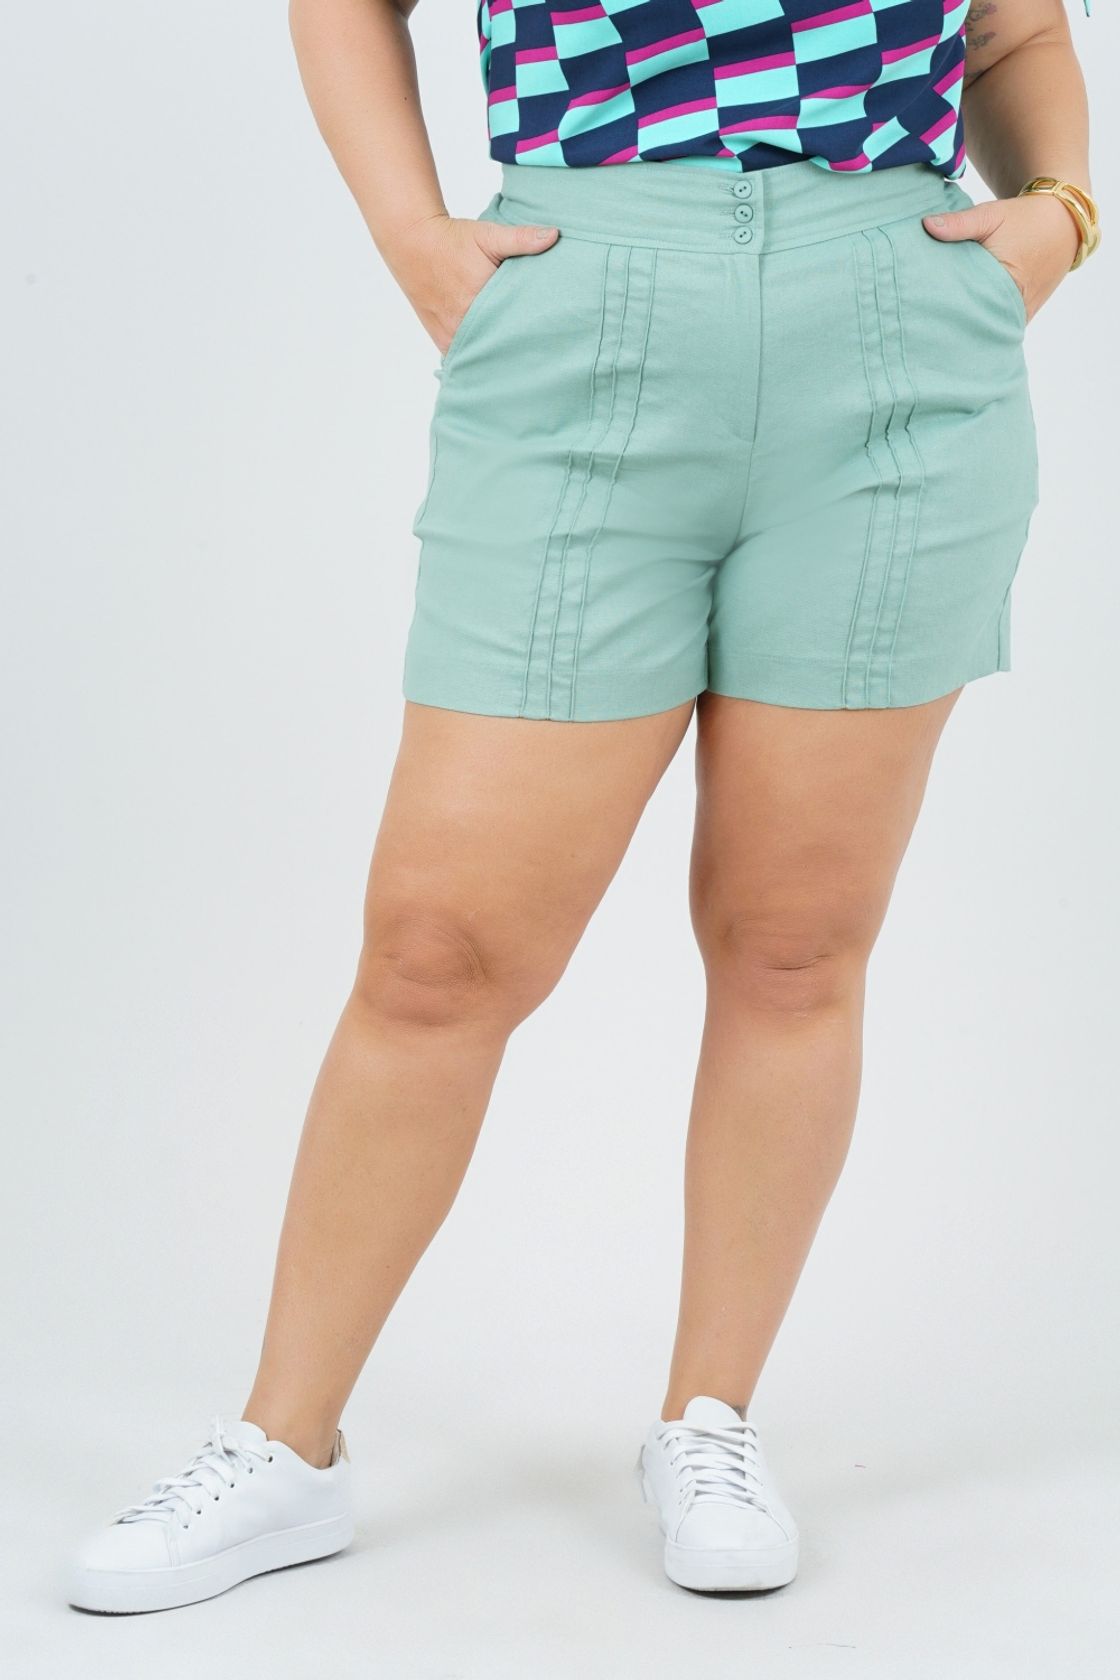 Shorts Plus Size Ferradura Linho - Program Moda